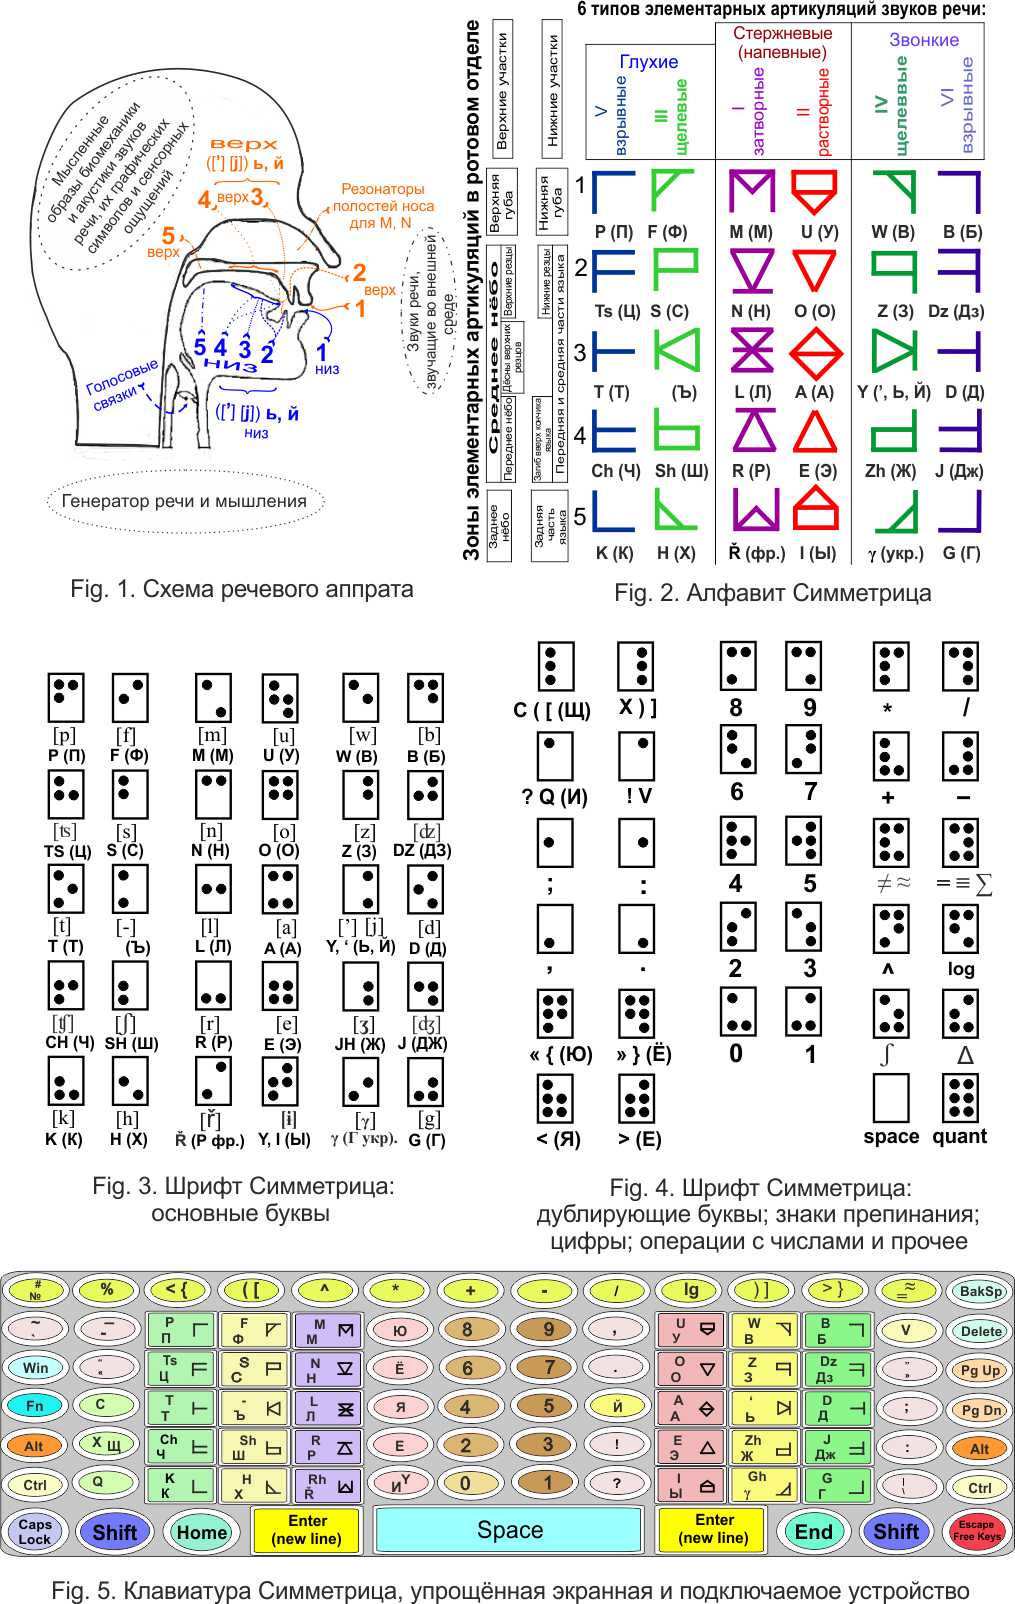 Articulation scheme of speech sounds; Symmetric Alphabet and Embossed Point Font Symmetric